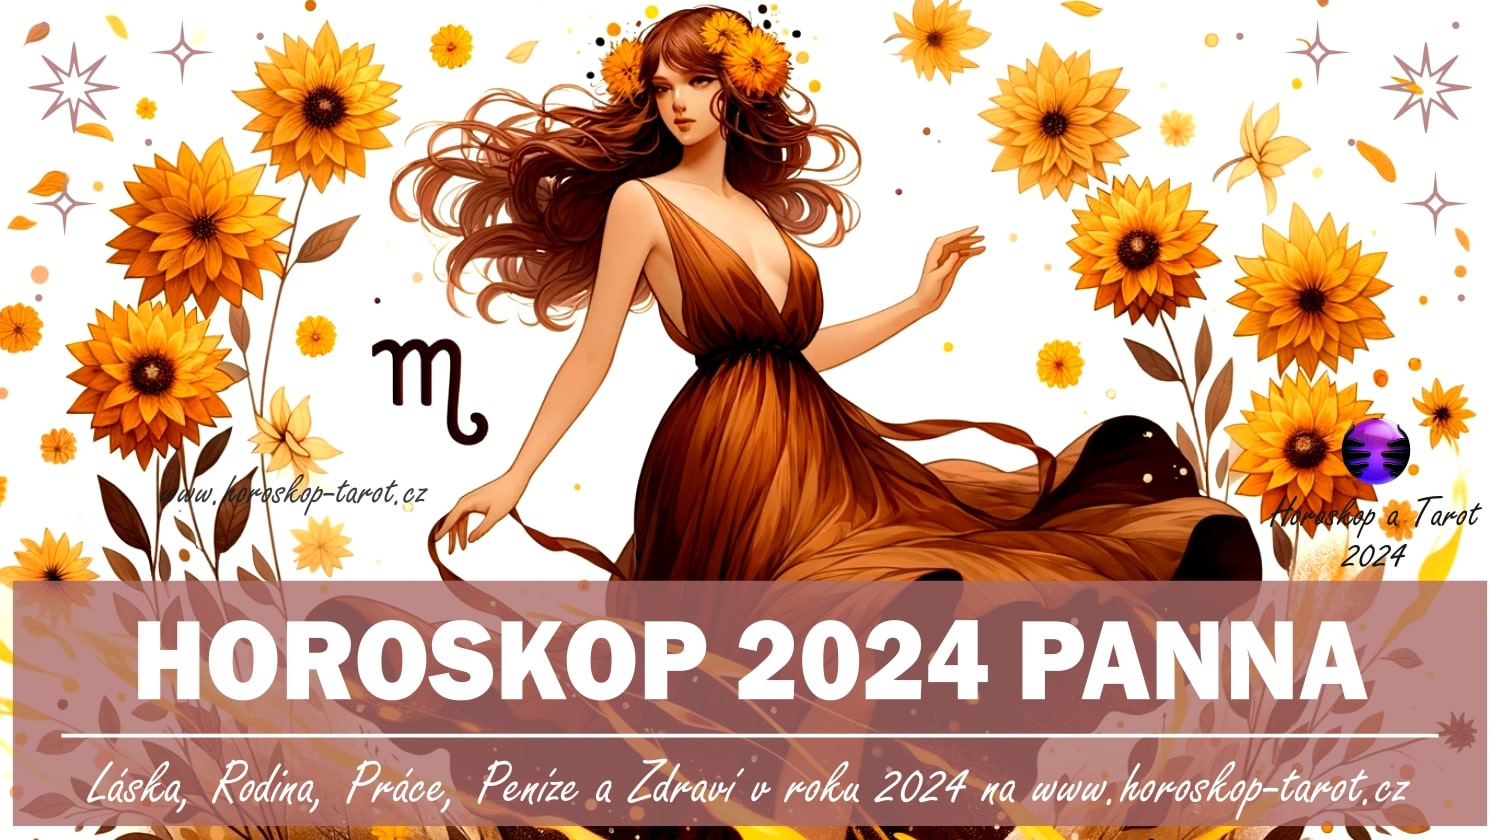 Horoskop 2024 Panna horoskoptarot.cz